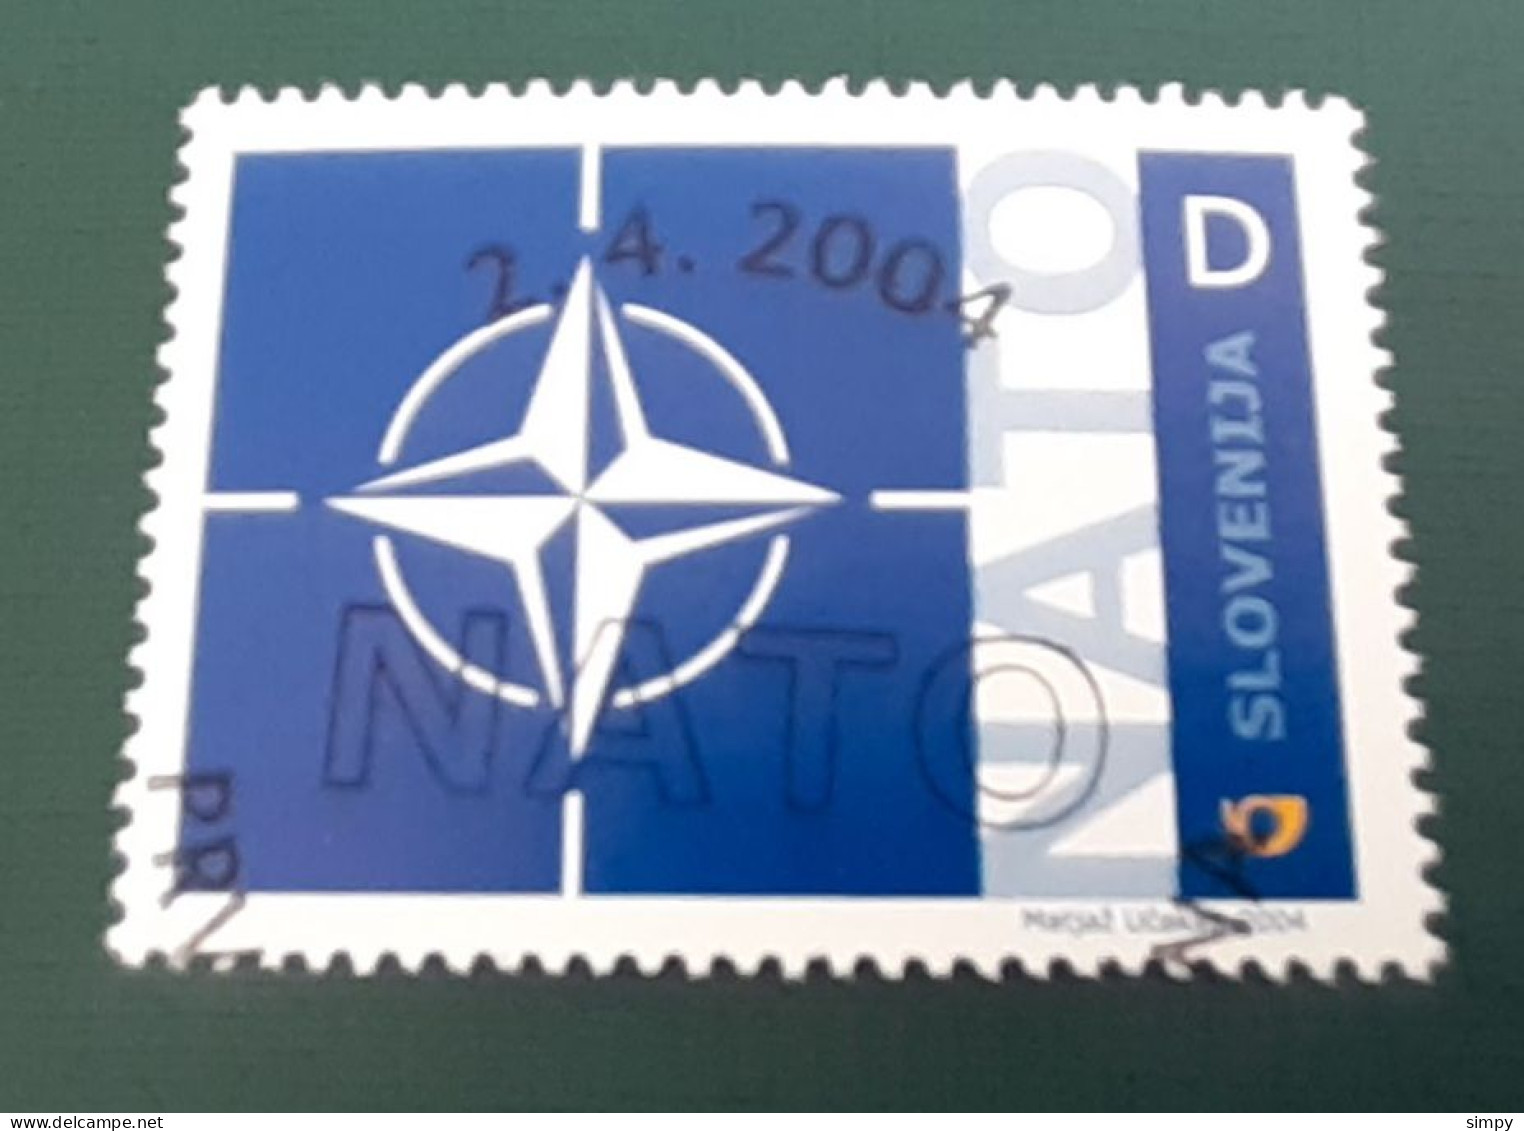 SLOVENIA 2004 Accession Of Slovenia To The NATO Michel 468 Used Stamp - Slovénie